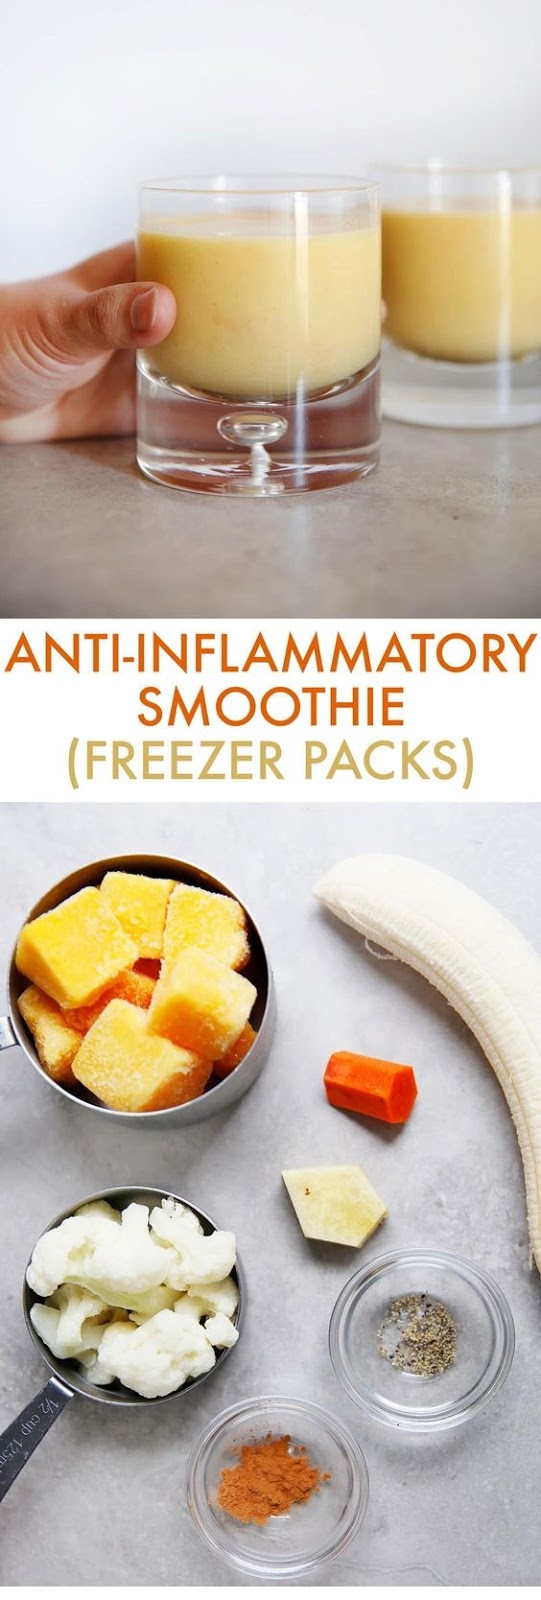 Anti-Inflammatory Smoothie Freezer Pack